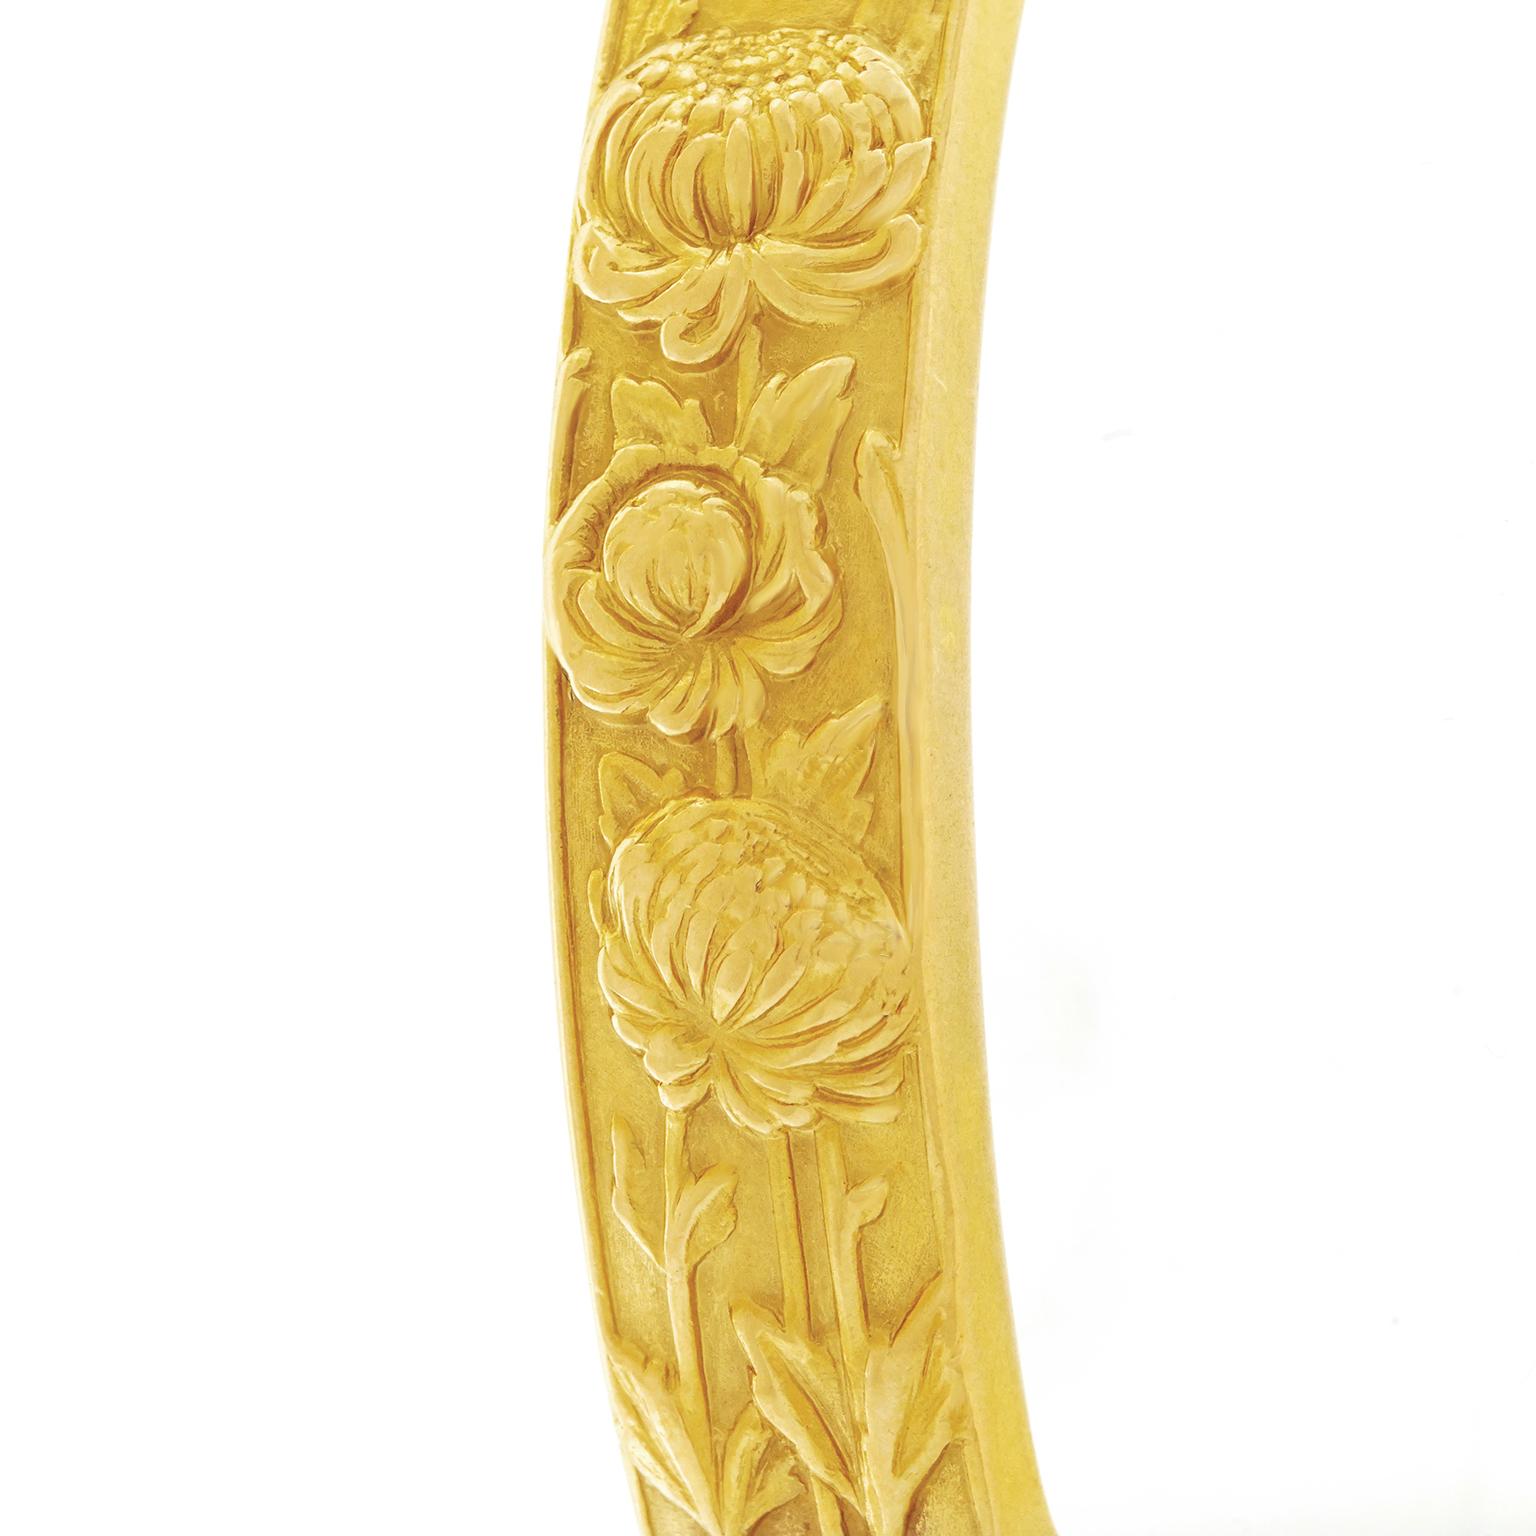 Women's Riker Brothers Art Nouveau Gold Bangle